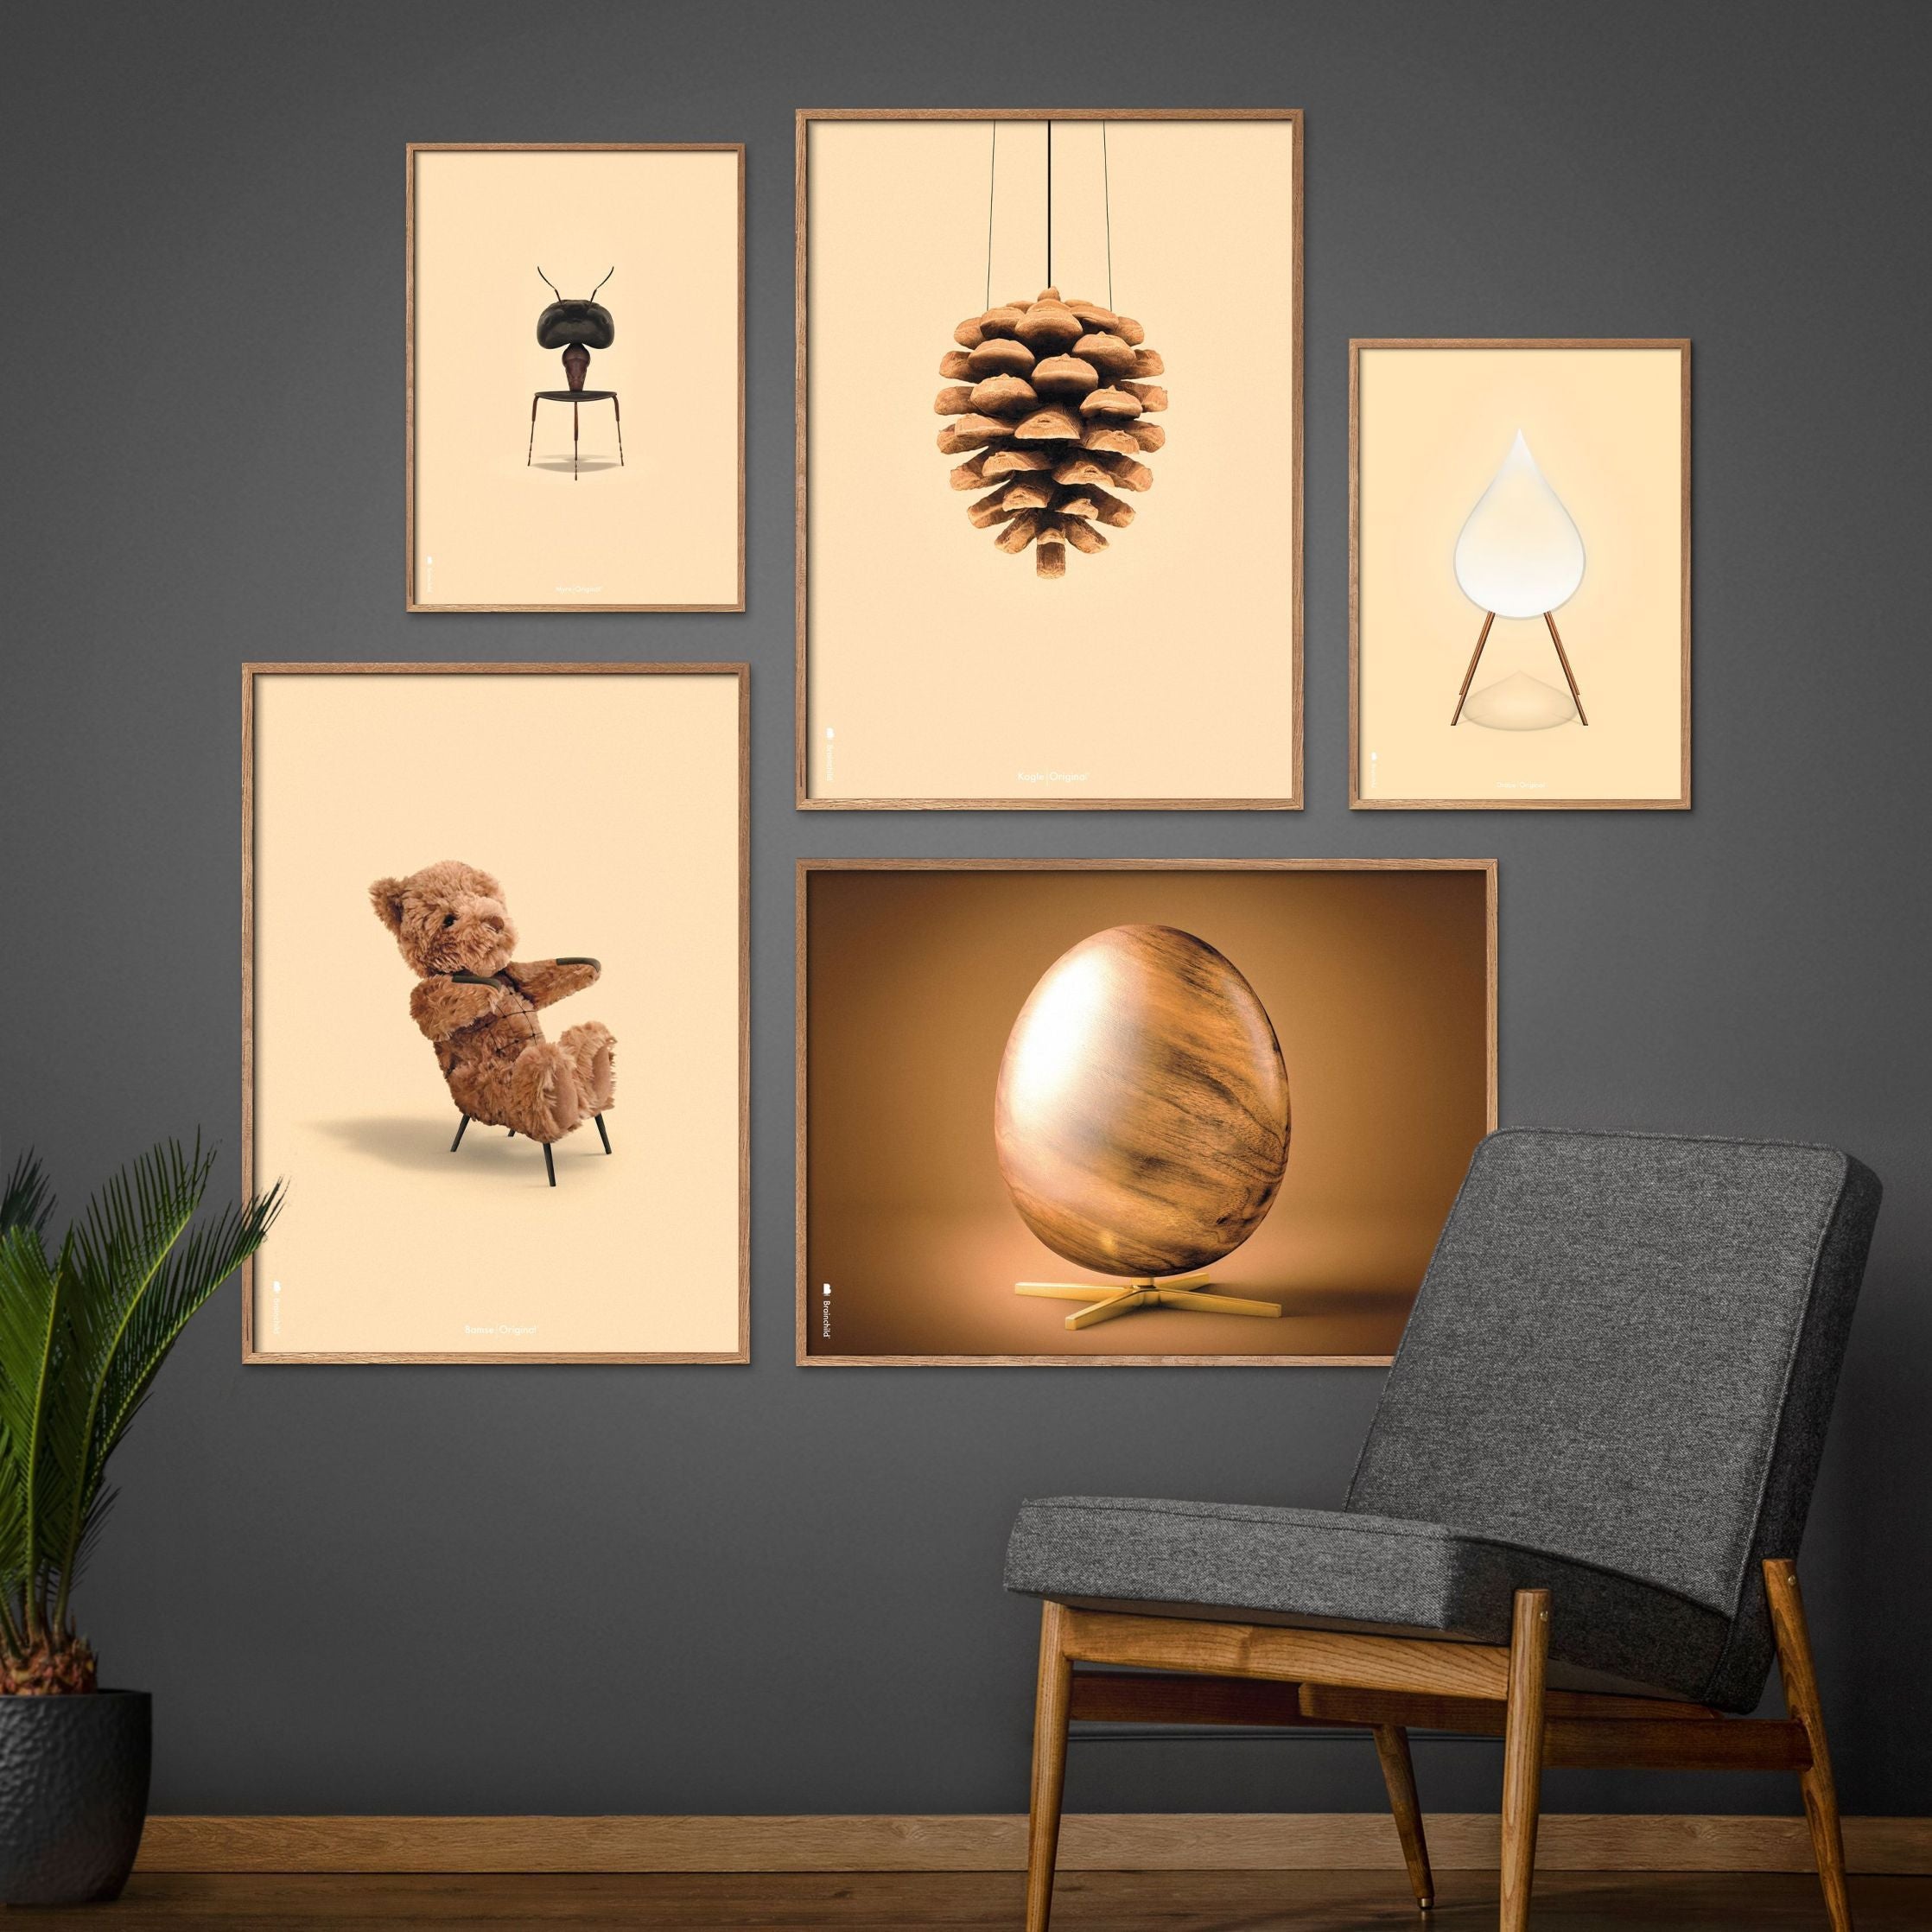 Brainchild Teddybeer klassieke poster, frame gemaakt van licht hout 30x40 cm, zandkleurige achtergrond